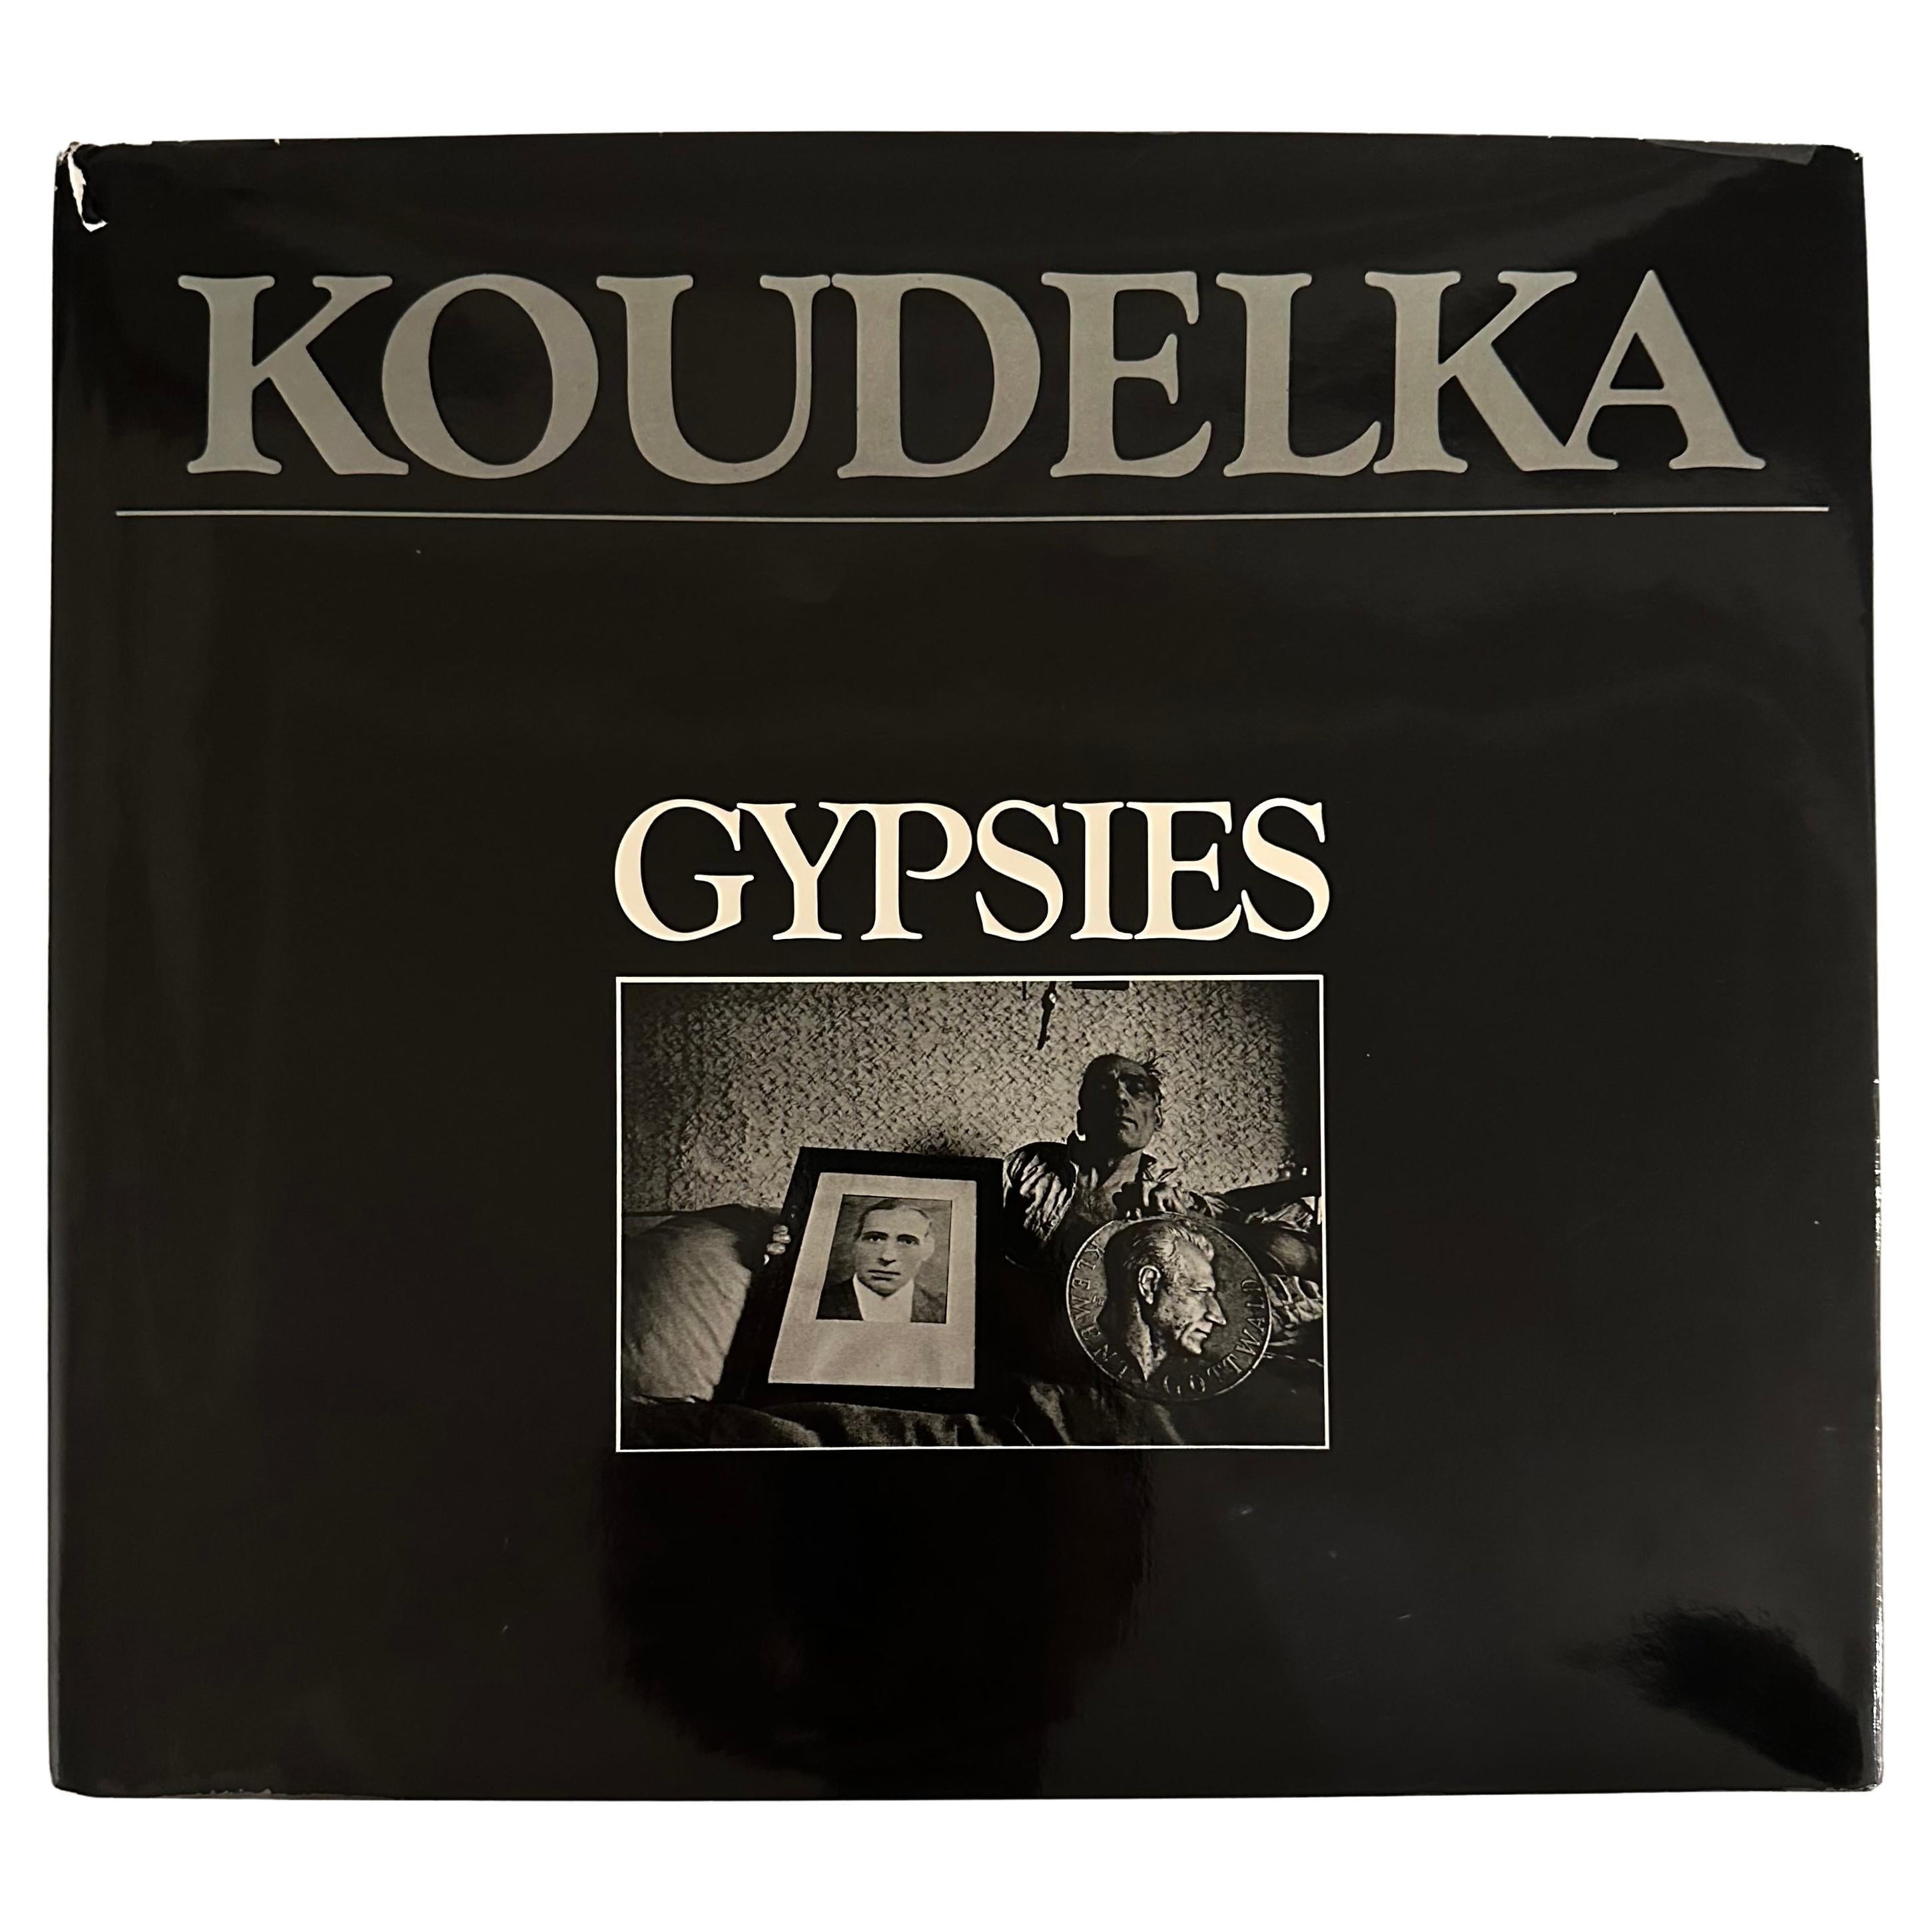 GYPSIES - Josef Koudelka - 1. U.S. Ausgabe, New York, 1975